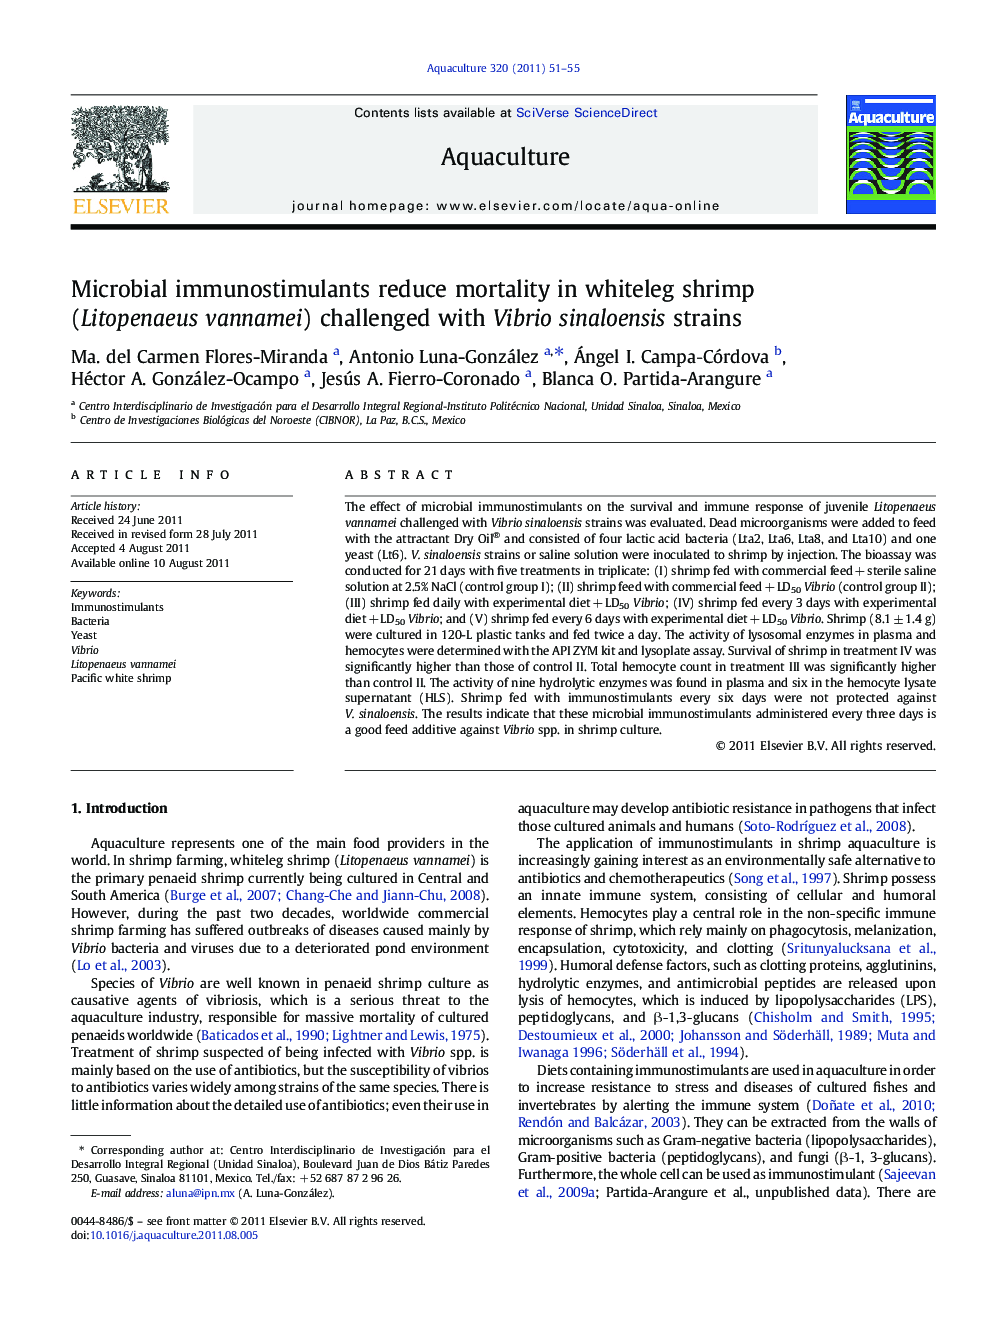 Microbial immunostimulants reduce mortality in whiteleg shrimp (Litopenaeus vannamei) challenged with Vibrio sinaloensis strains